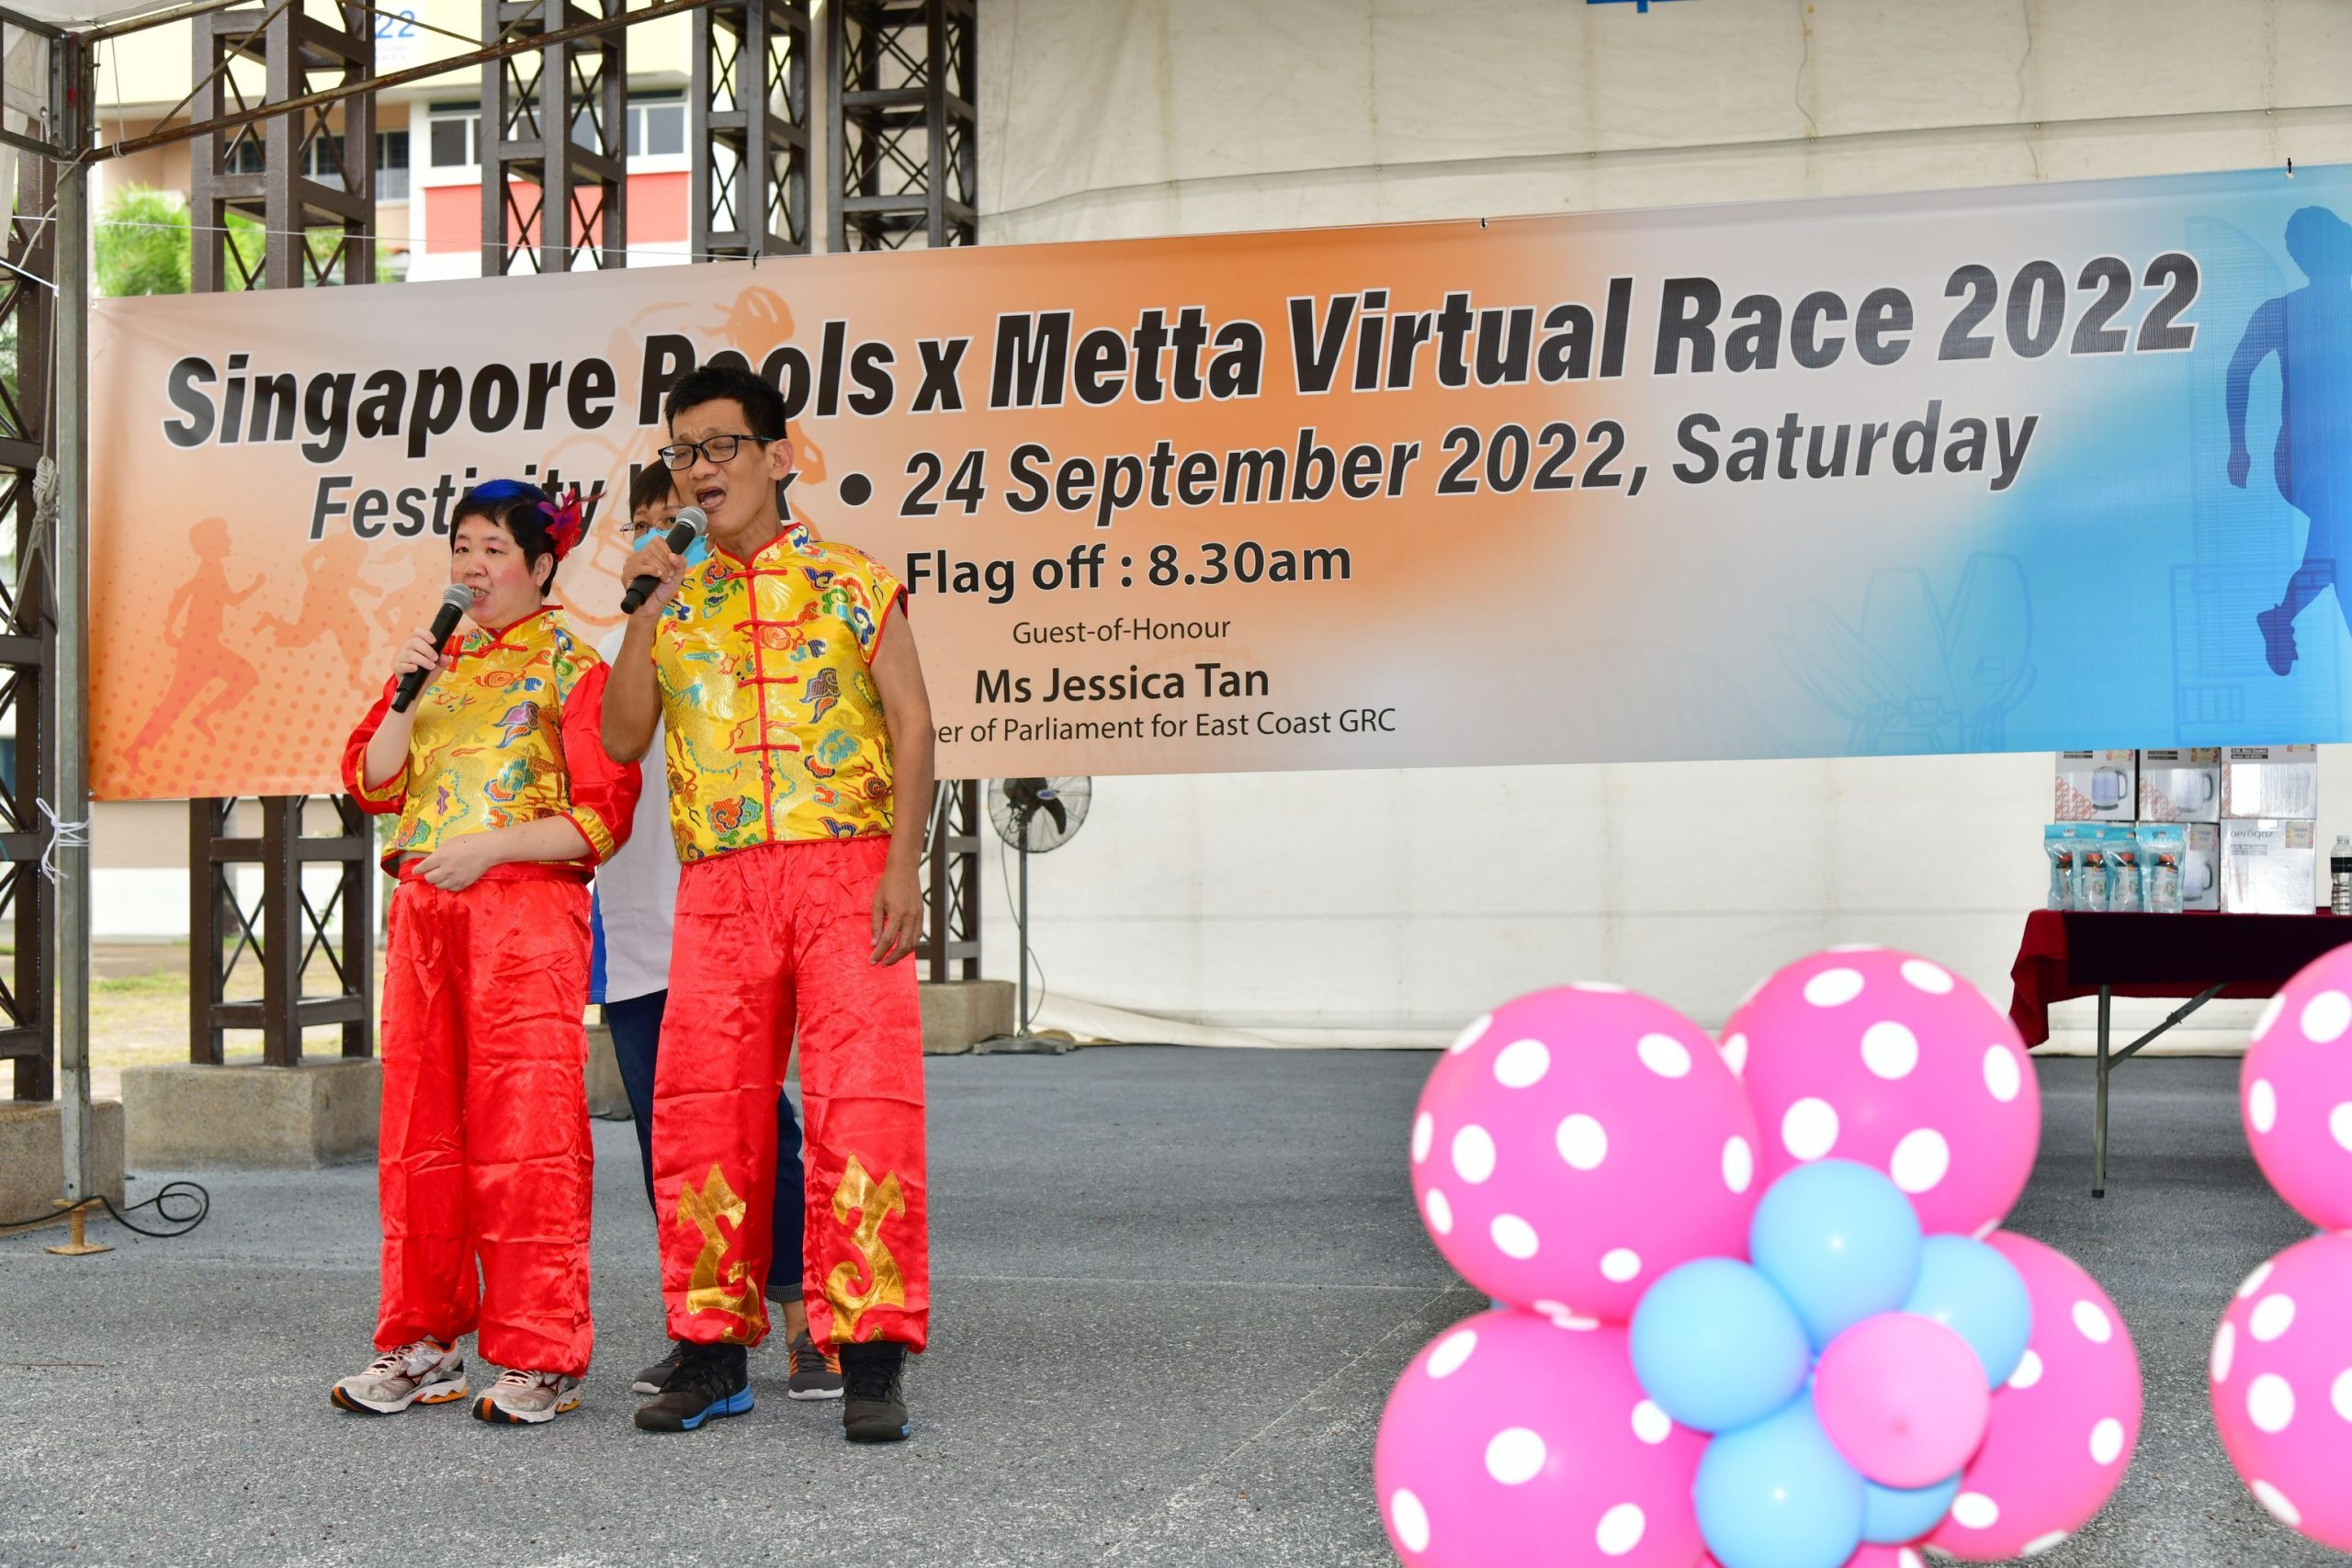 Singapore Pools x Metta Charity Run 2022